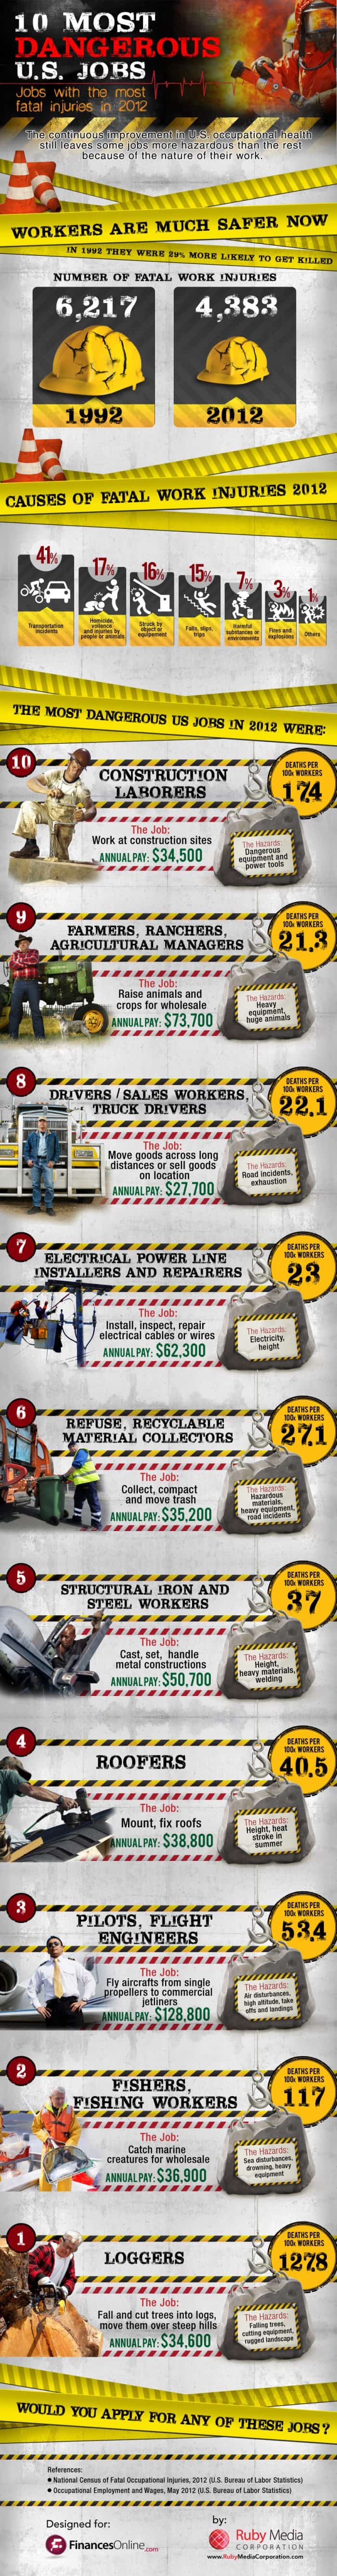 Top 10 Most Dangerous Jobs Infographic